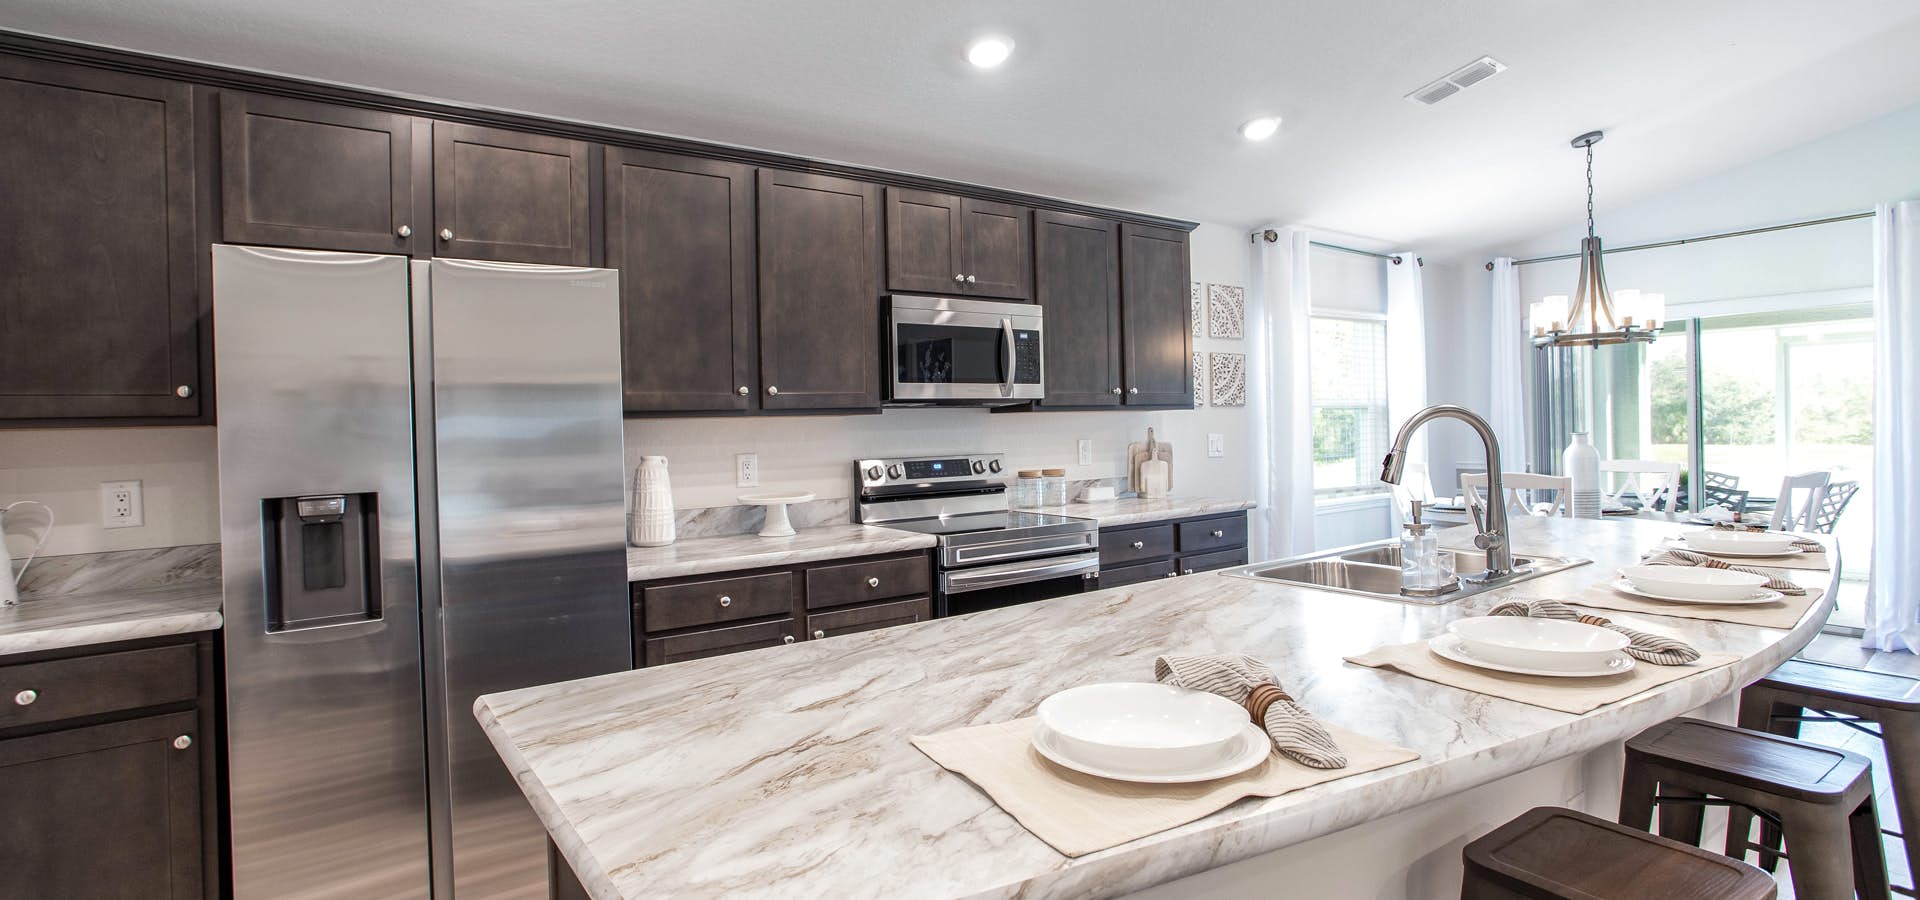 Kitchen countertops resembling granite